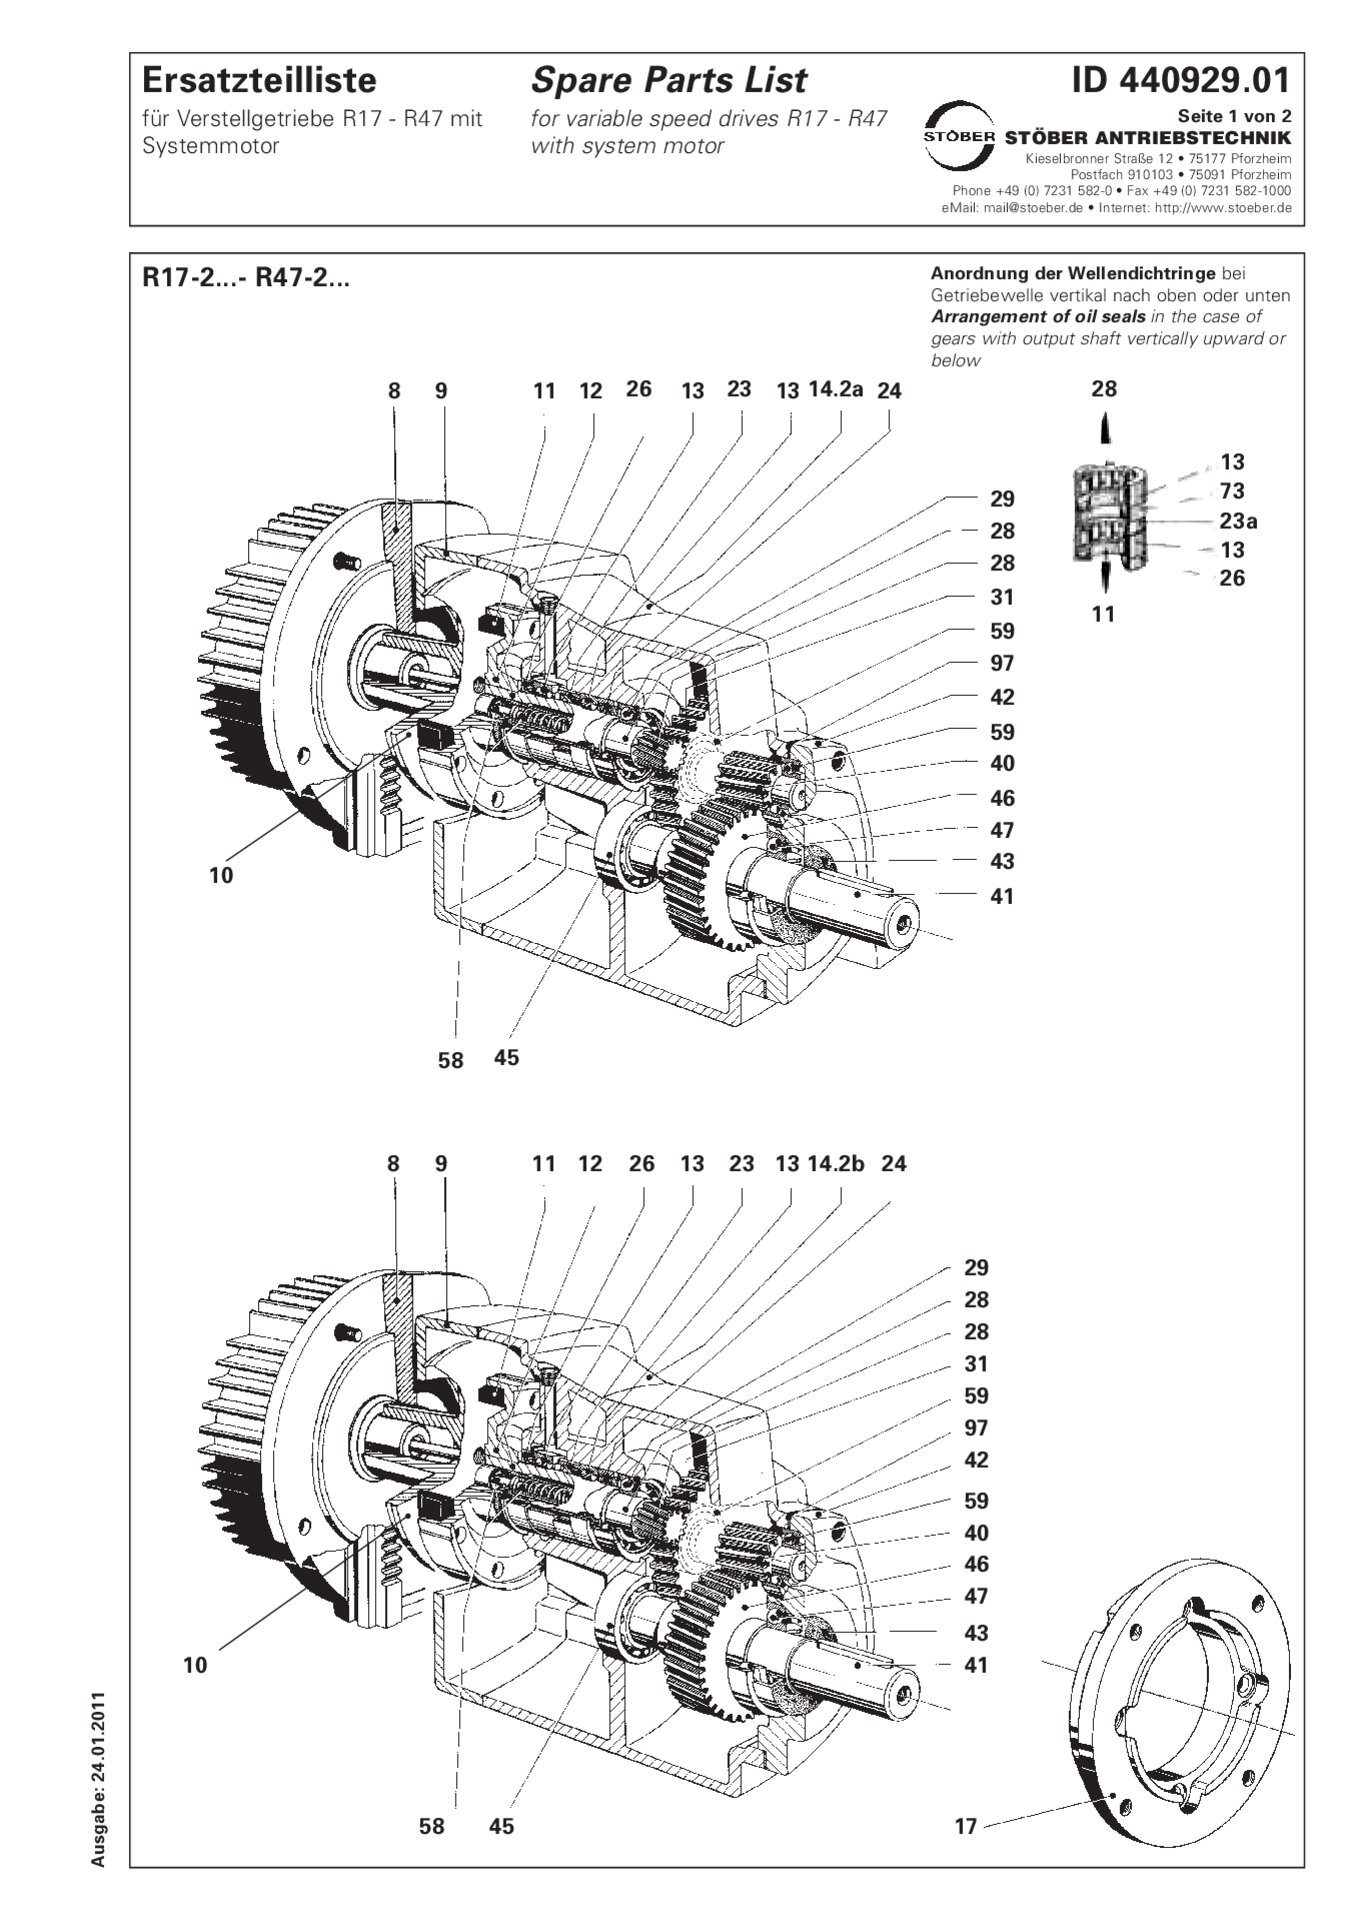 Ersatzteilliste R17-2/R27-2/R37-2/R47-2 mit SystemmotorListino dei pezzi di ricambio R17-2/R27-2/R37-2/R47-2 con motore di sistemaSpare parts list R17-2/R27-2/R37-2/R47-2 with system motorListe des pièces de rechange R17-2/R27-2/R37-2/R47-2 avec moteur systéme